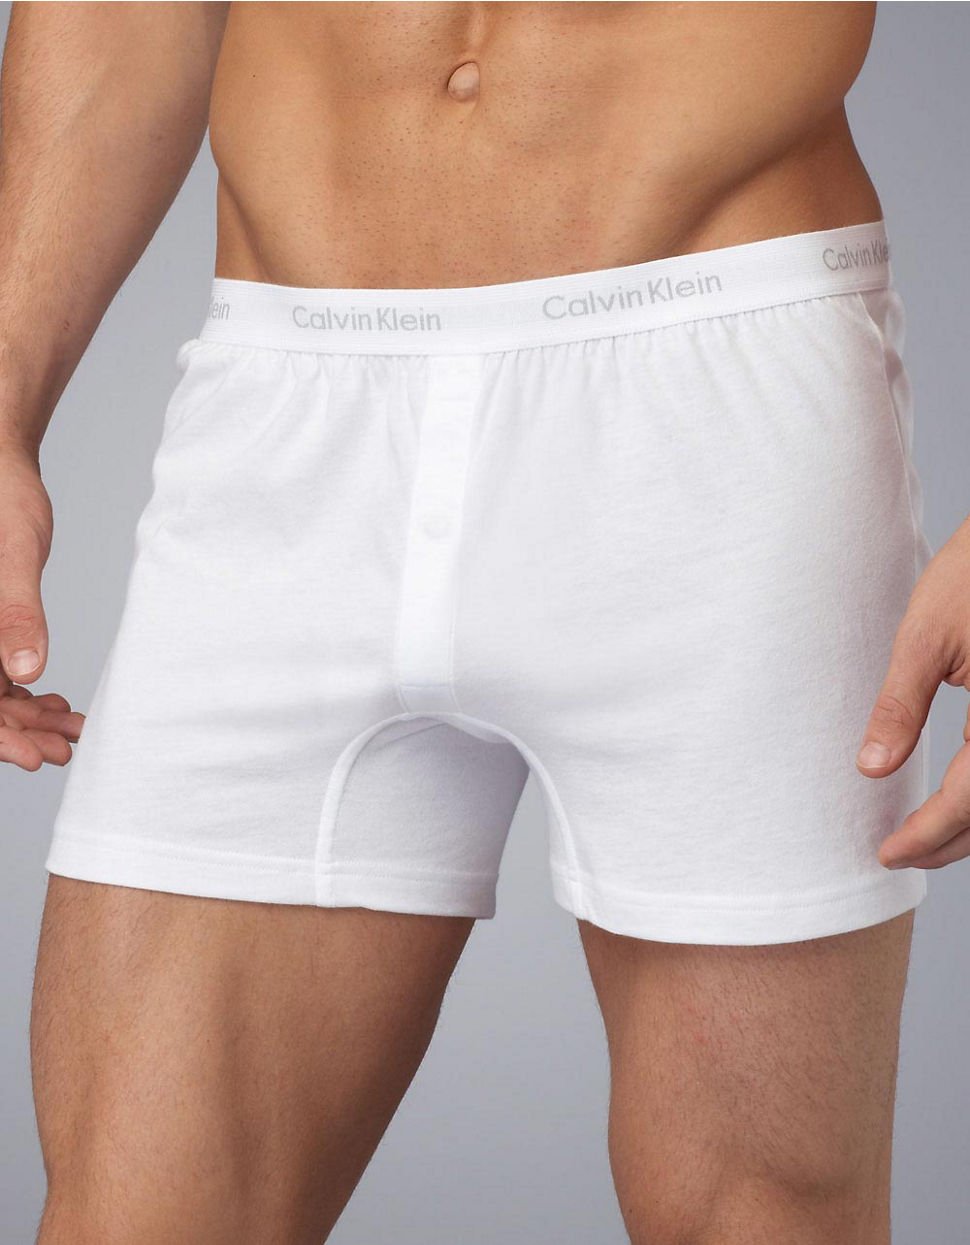 Lyst Calvin Klein Slim Fit Knit Boxer Shorts In White For Men 1028